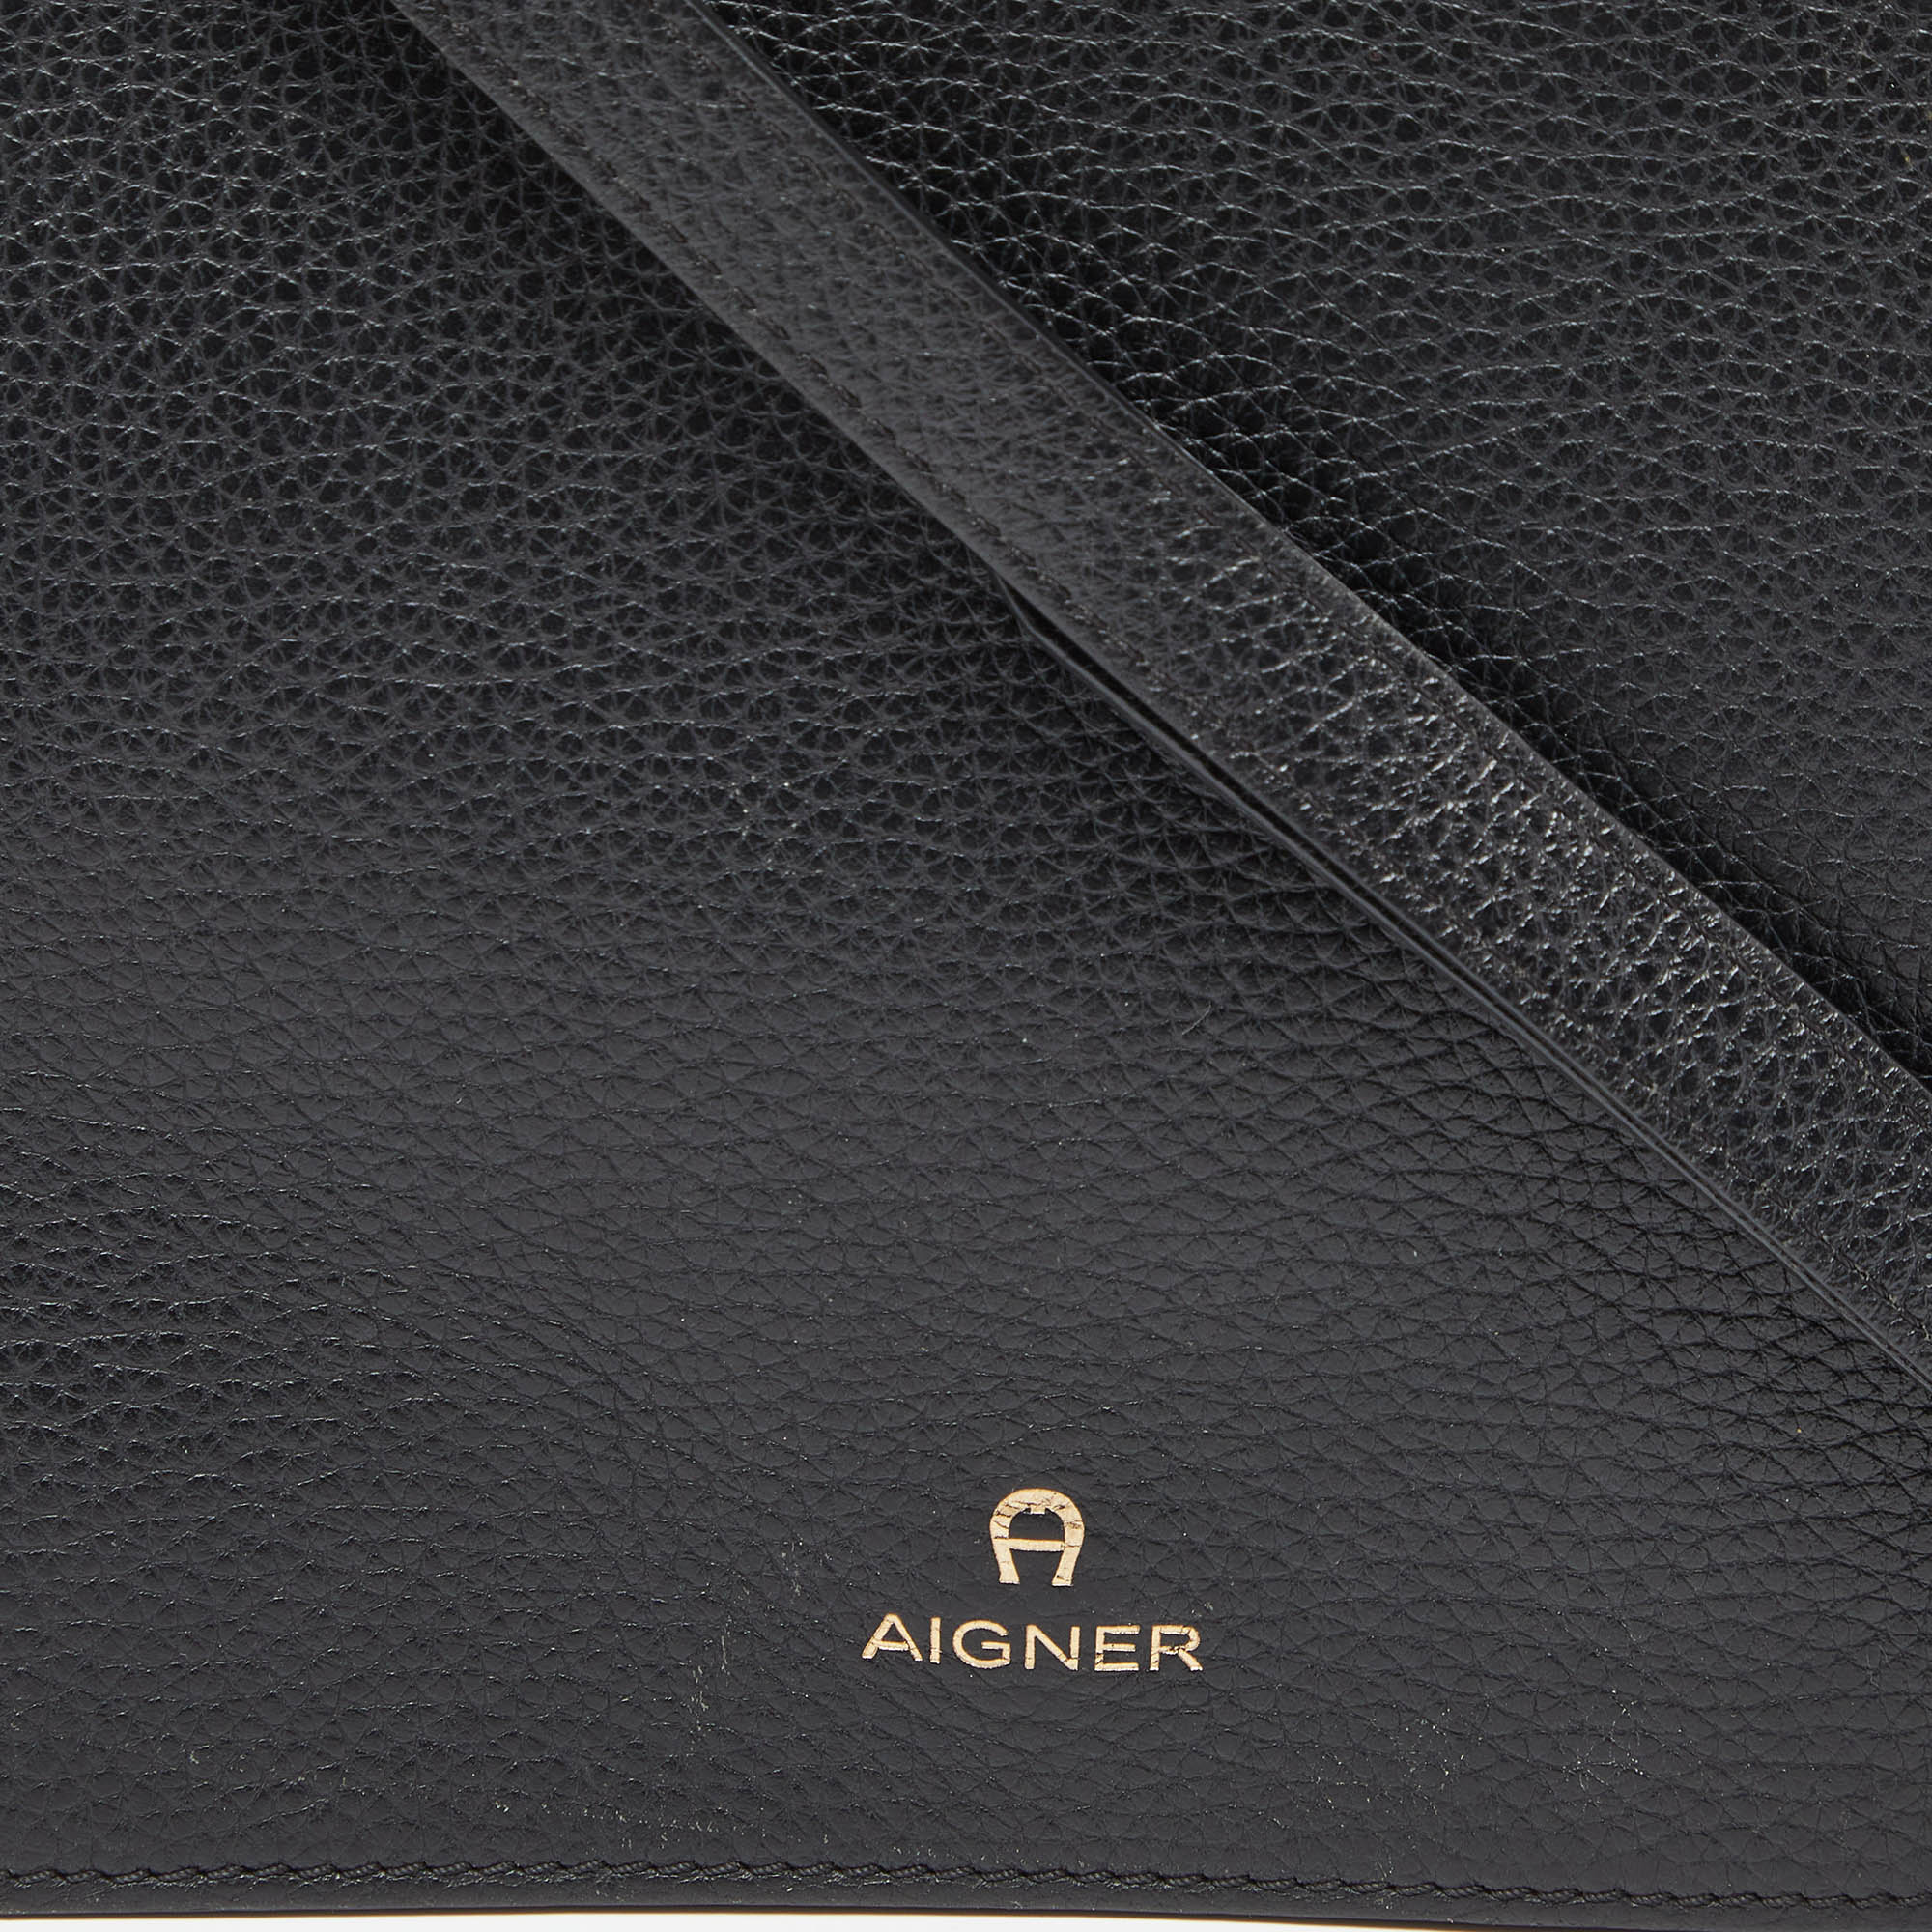 Aigner Black Leather Flap Crossbody Bag